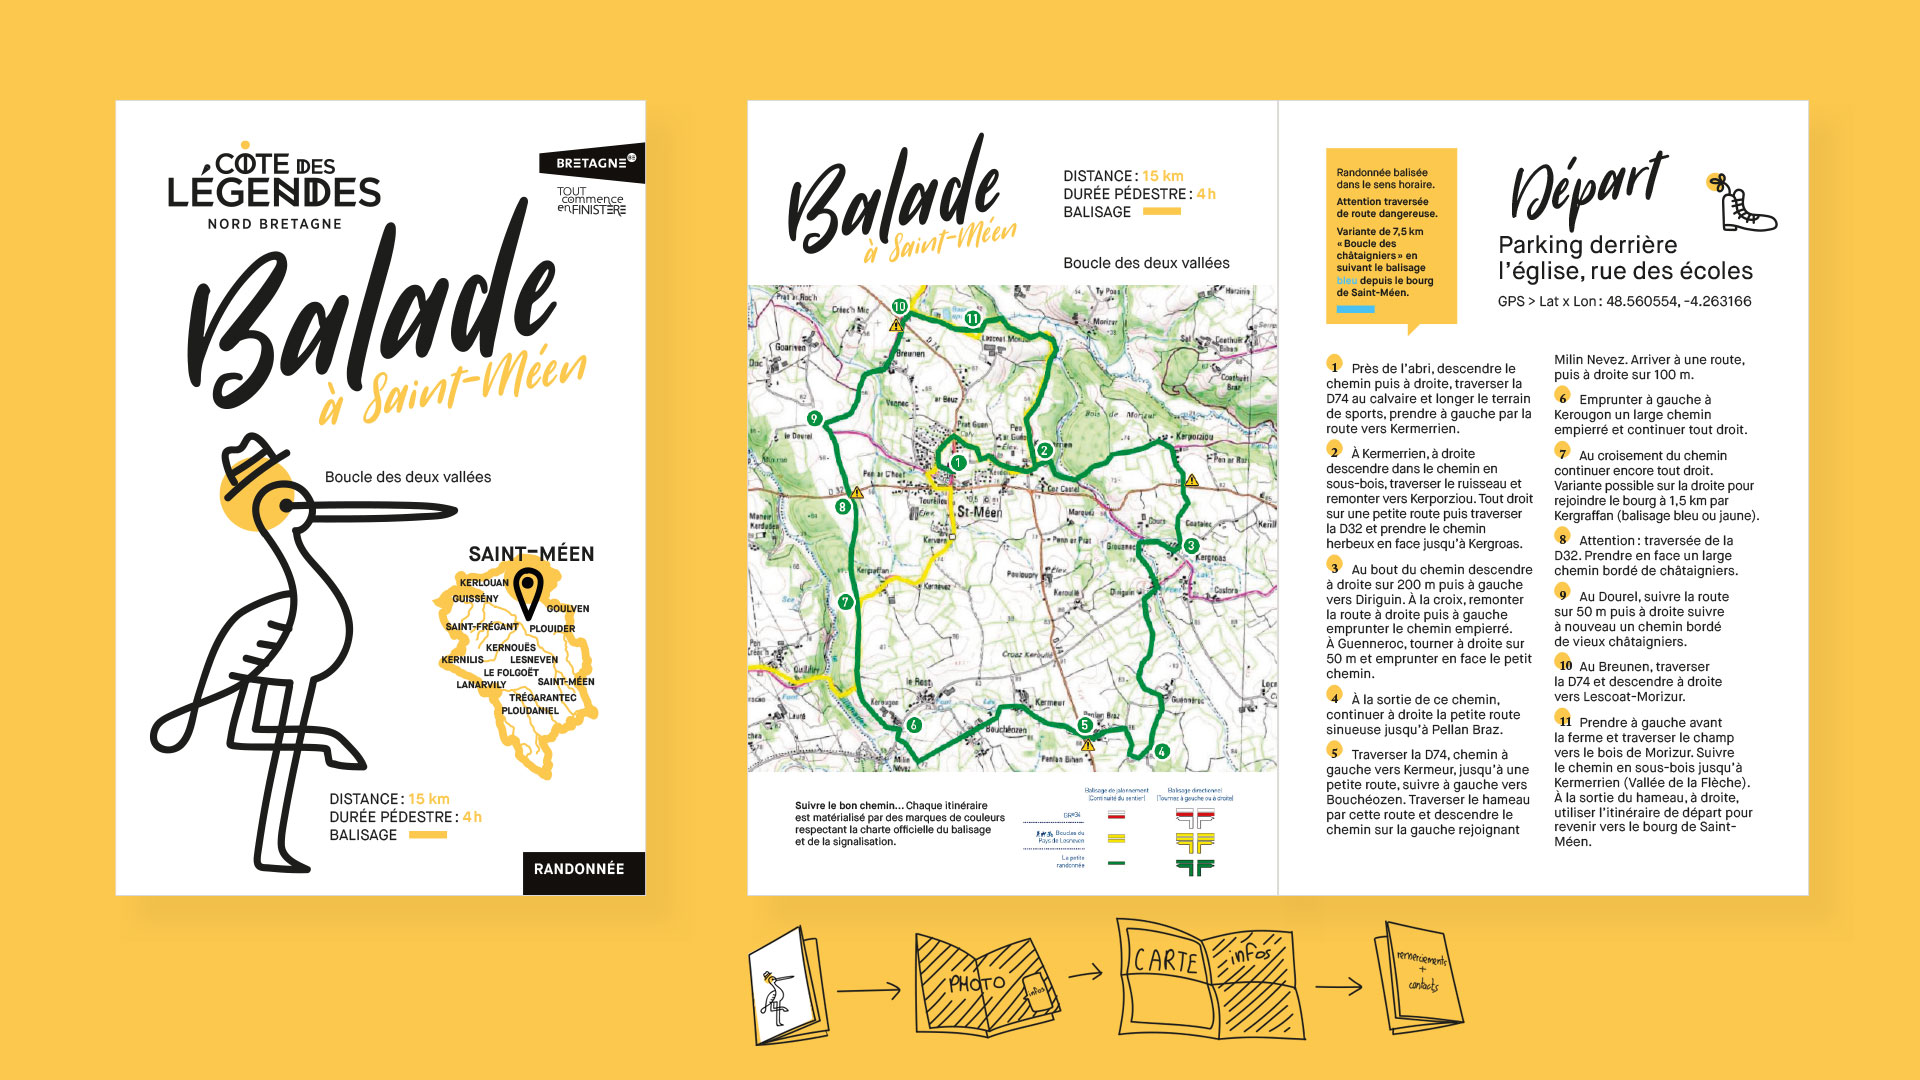 Meneham office tourisme bretagne nord Identite visuelle charte edition brochure guide randonnee